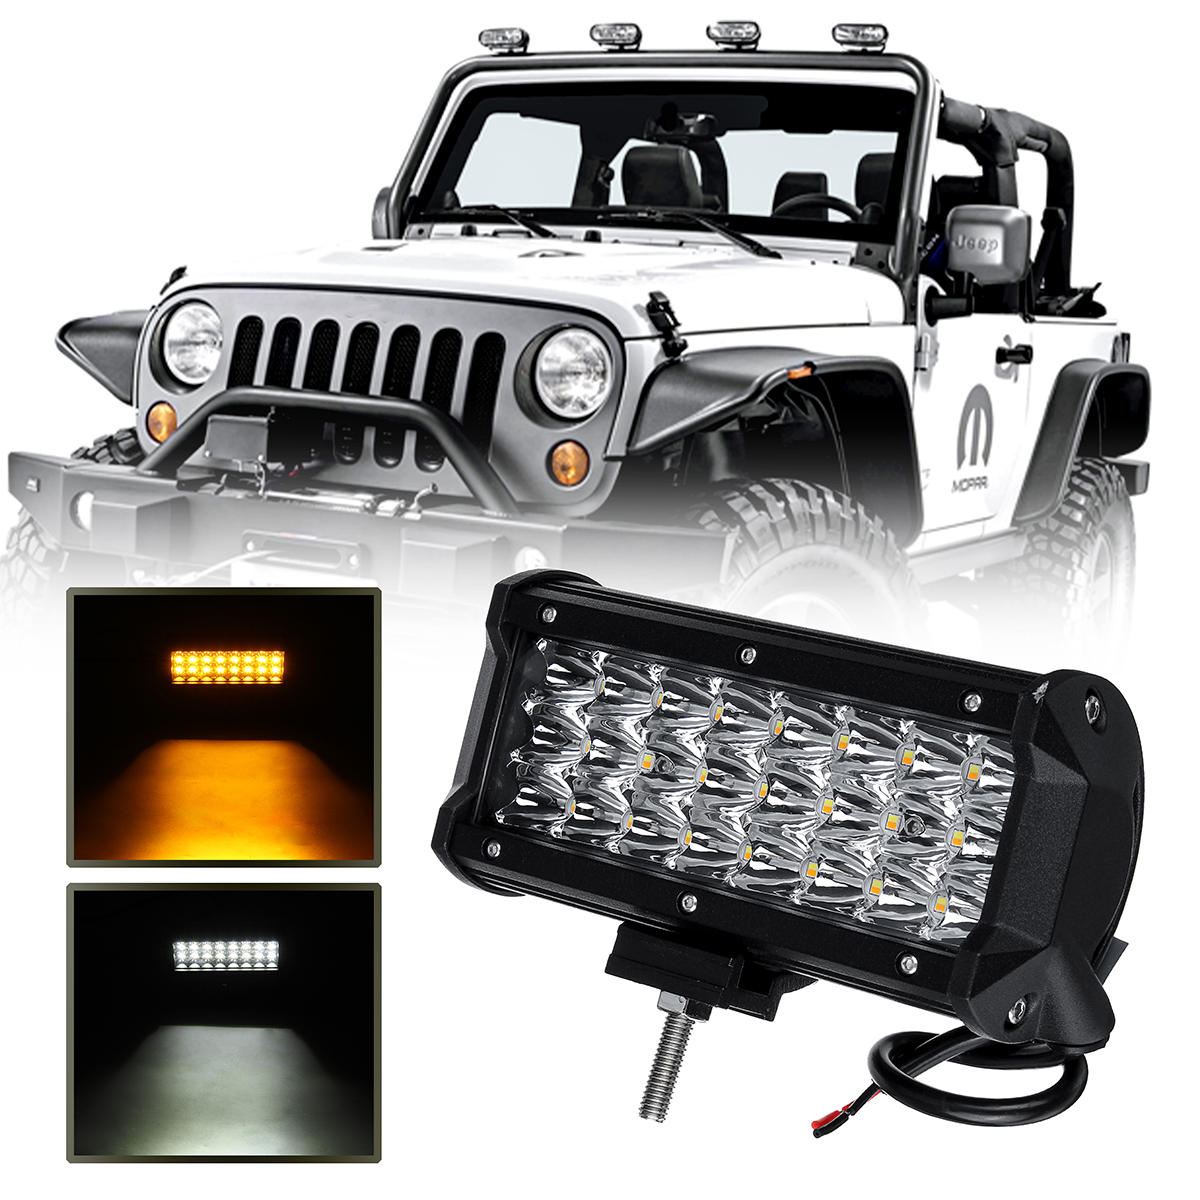 36W 12 LED Flood Work Light IP67 Off-road Lamp for Truck SUV Jeep Spot Lights/SG